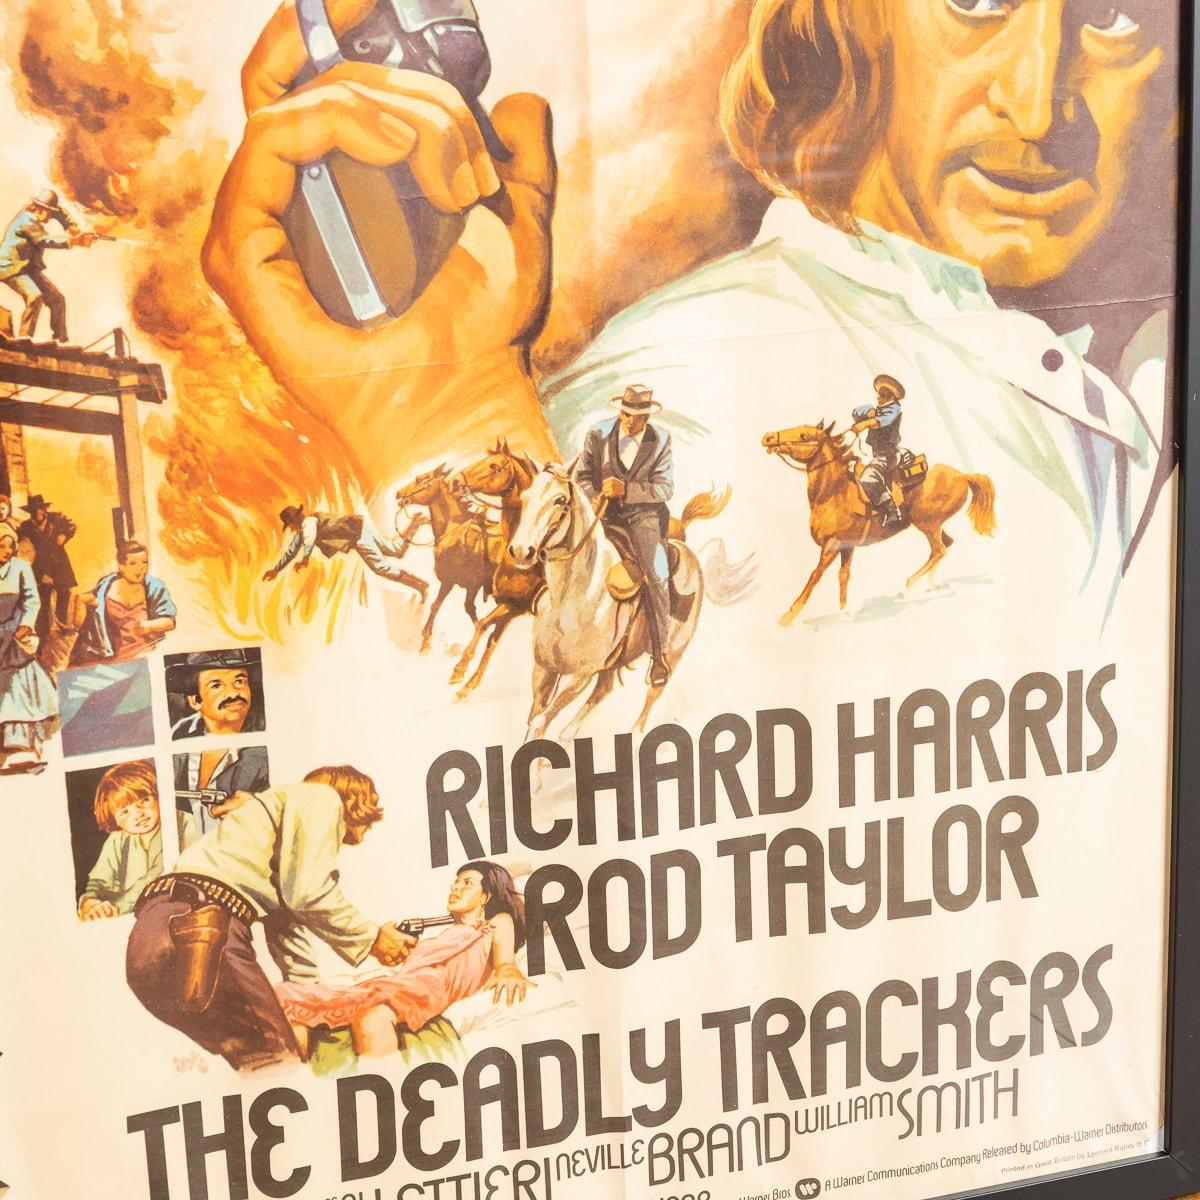 Original British Quad Black Belt Jones / Deadly Trackers Movie Poster, c.1973 For Sale 3